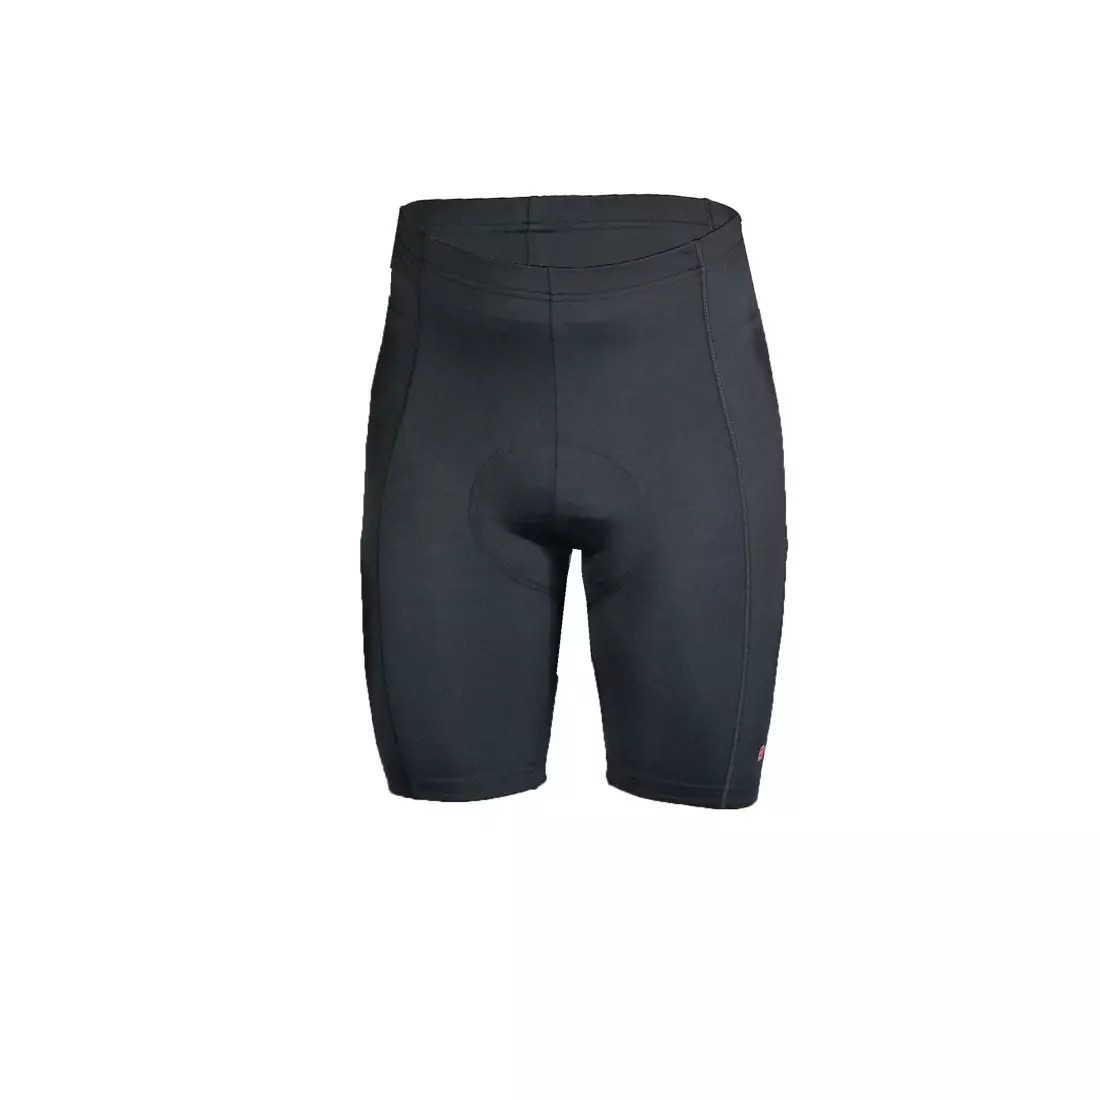 BIEMME SOUL - men's cycling shorts